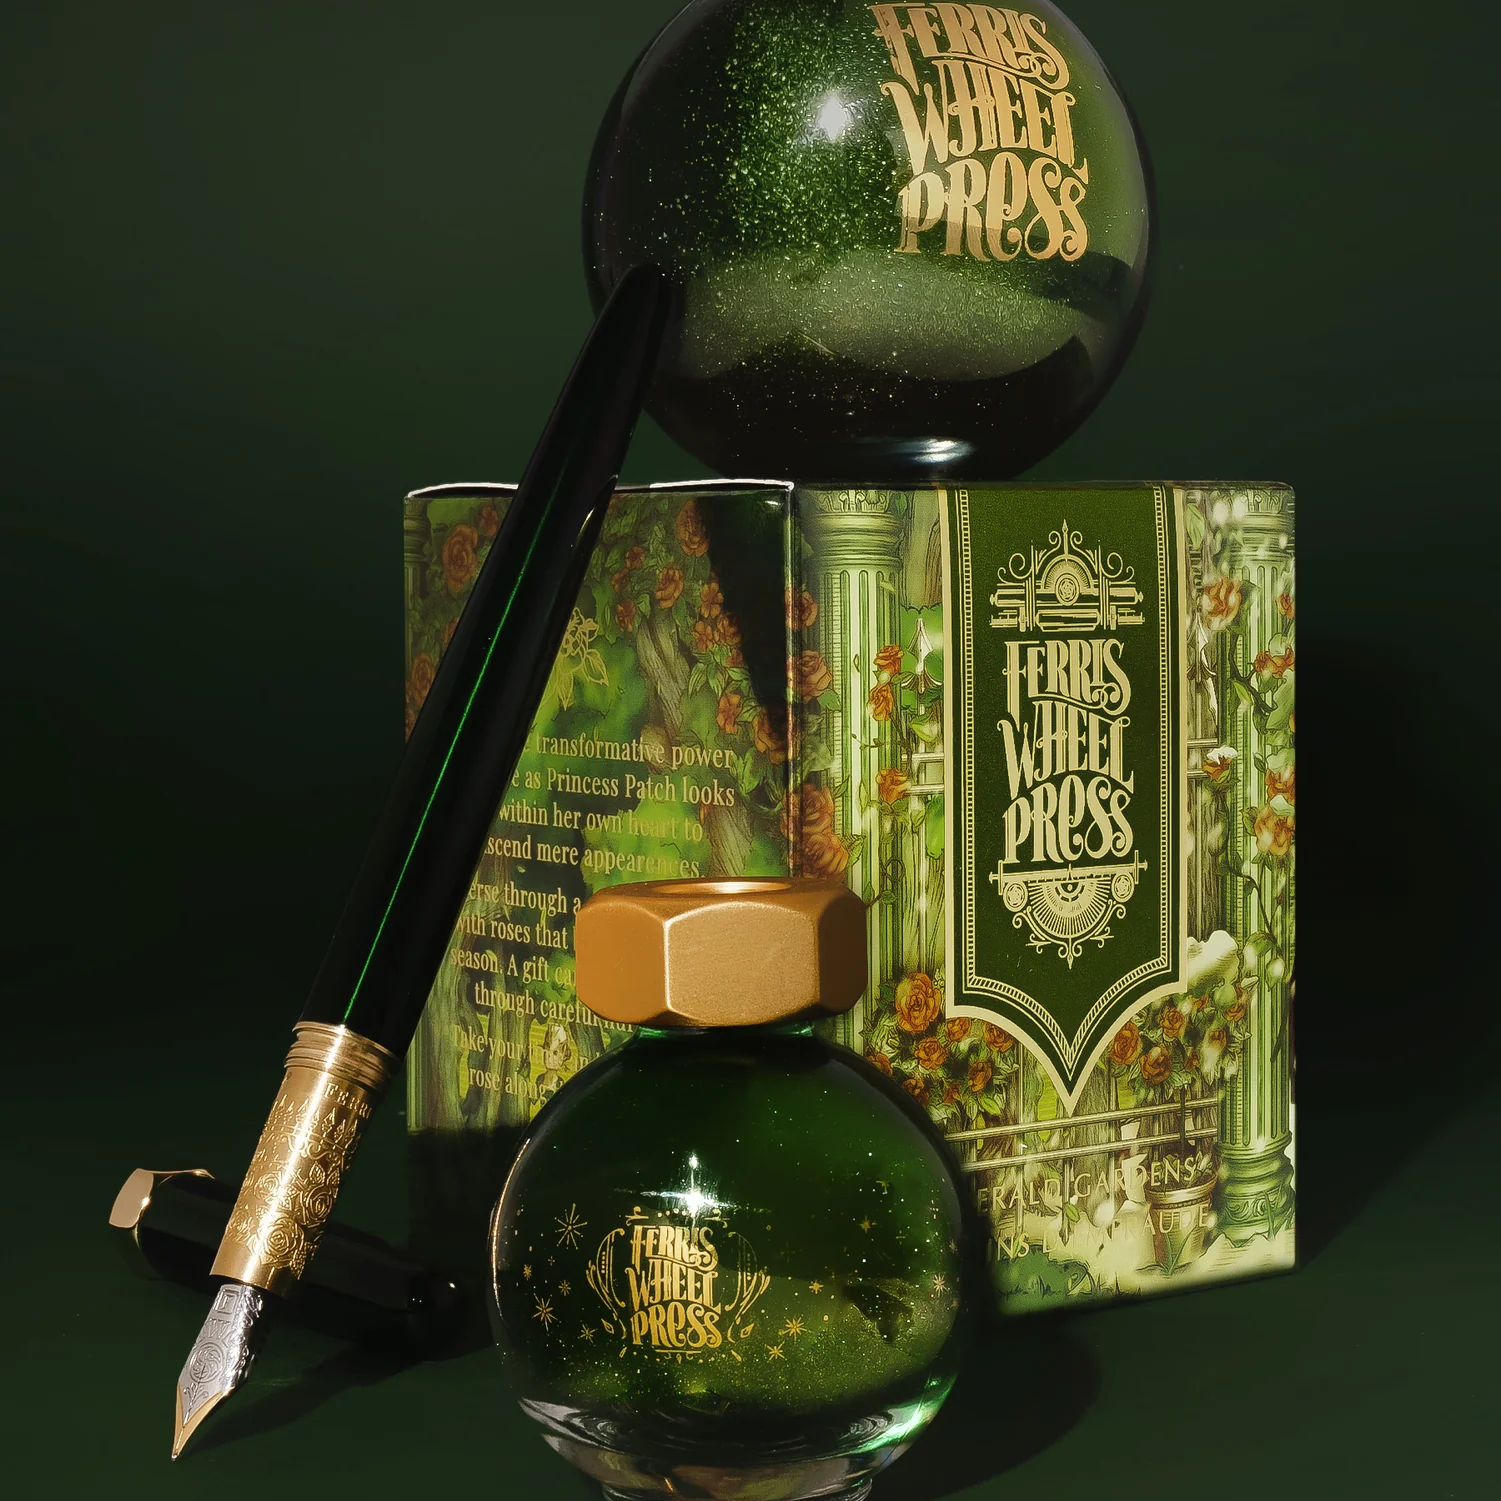 Penna stilografica Bijou - Emerald Gardens - Media